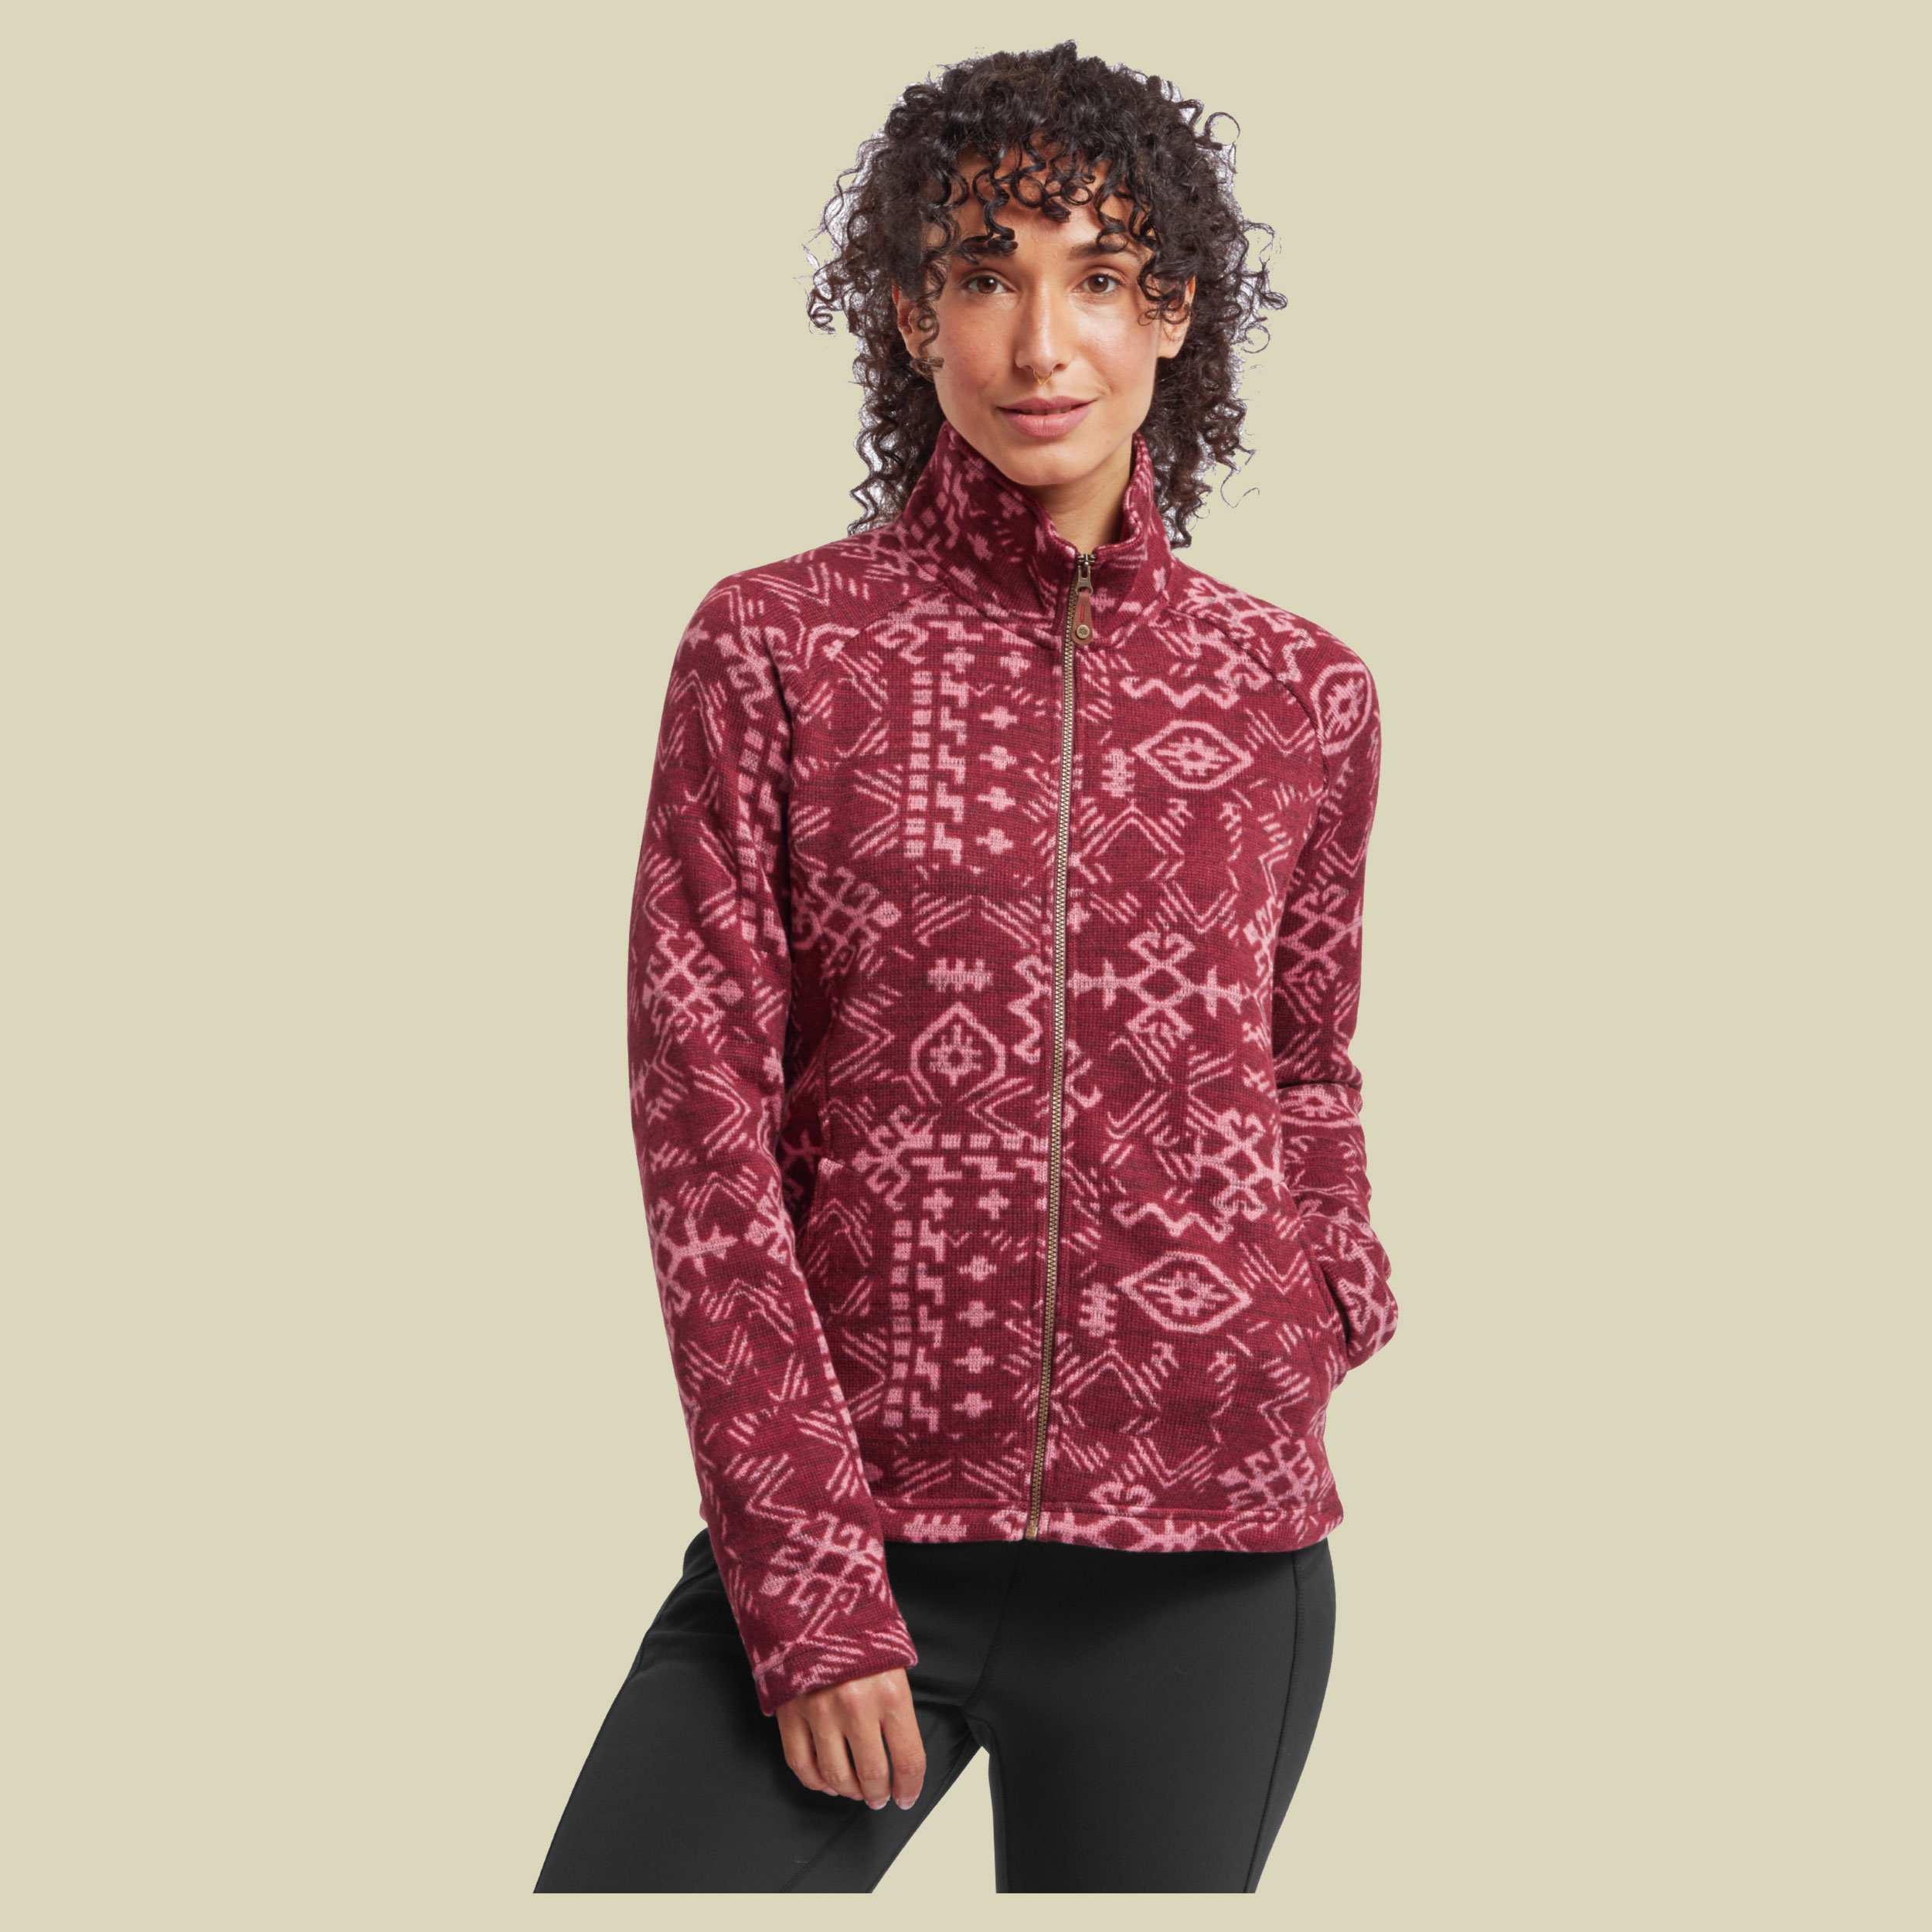 Bhutan Full Zip Jacket Women Größe L  Farbe beet red abstract